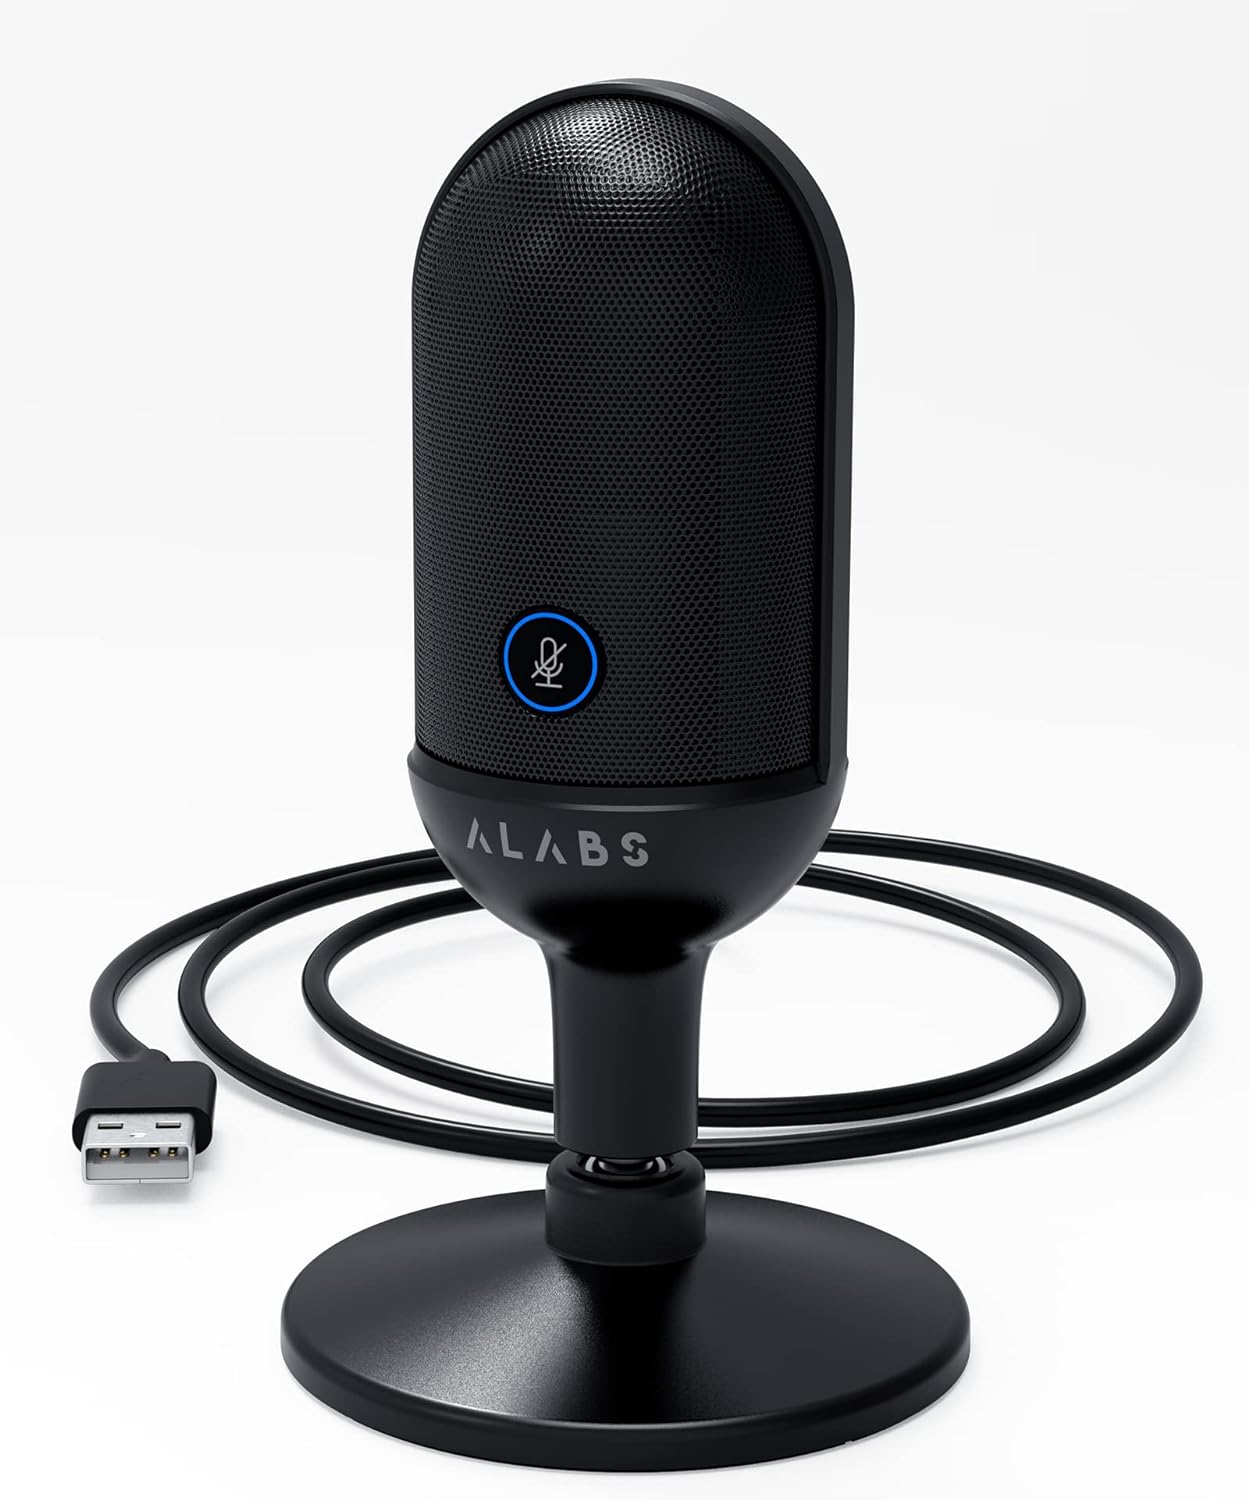 Micrófono USB, micrófono condensador para podcast para computadora, Ma -  VIRTUAL MUEBLES